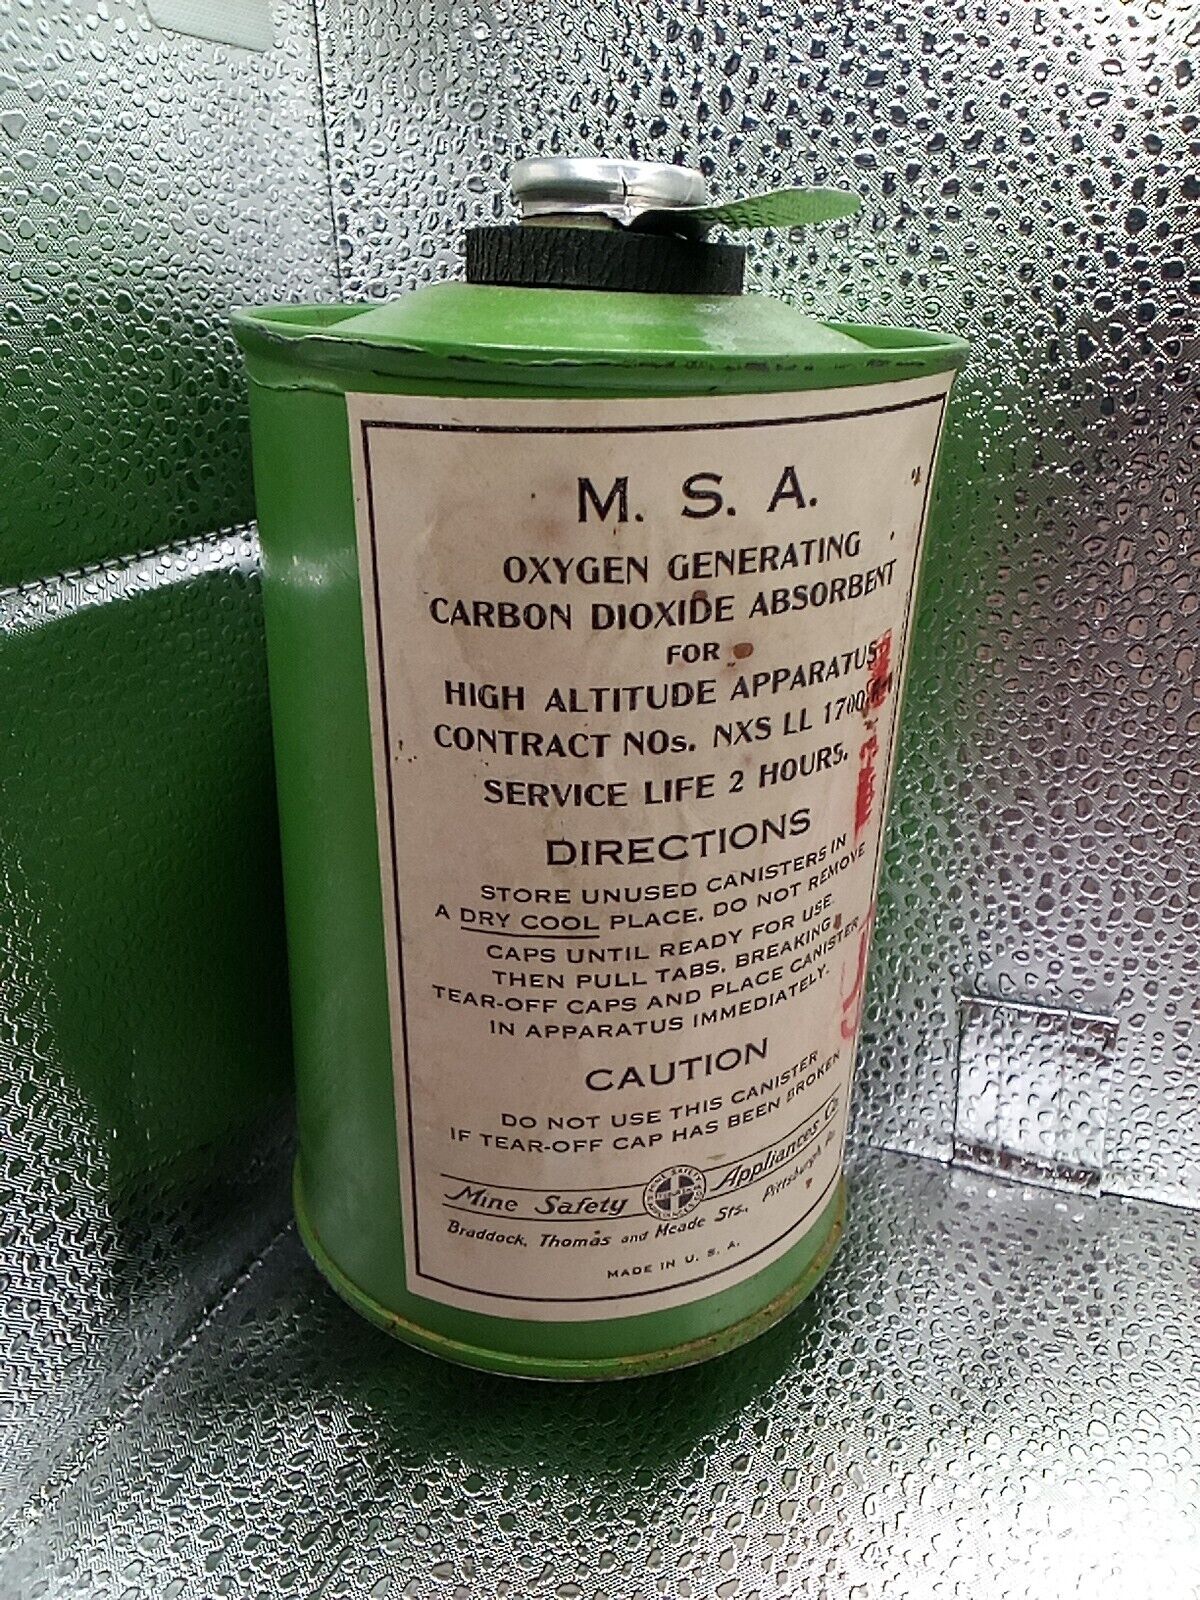 Vintage M.S.A. Oxygen Generating Carbon Dioxide Absorbent Mine Safety Appliance